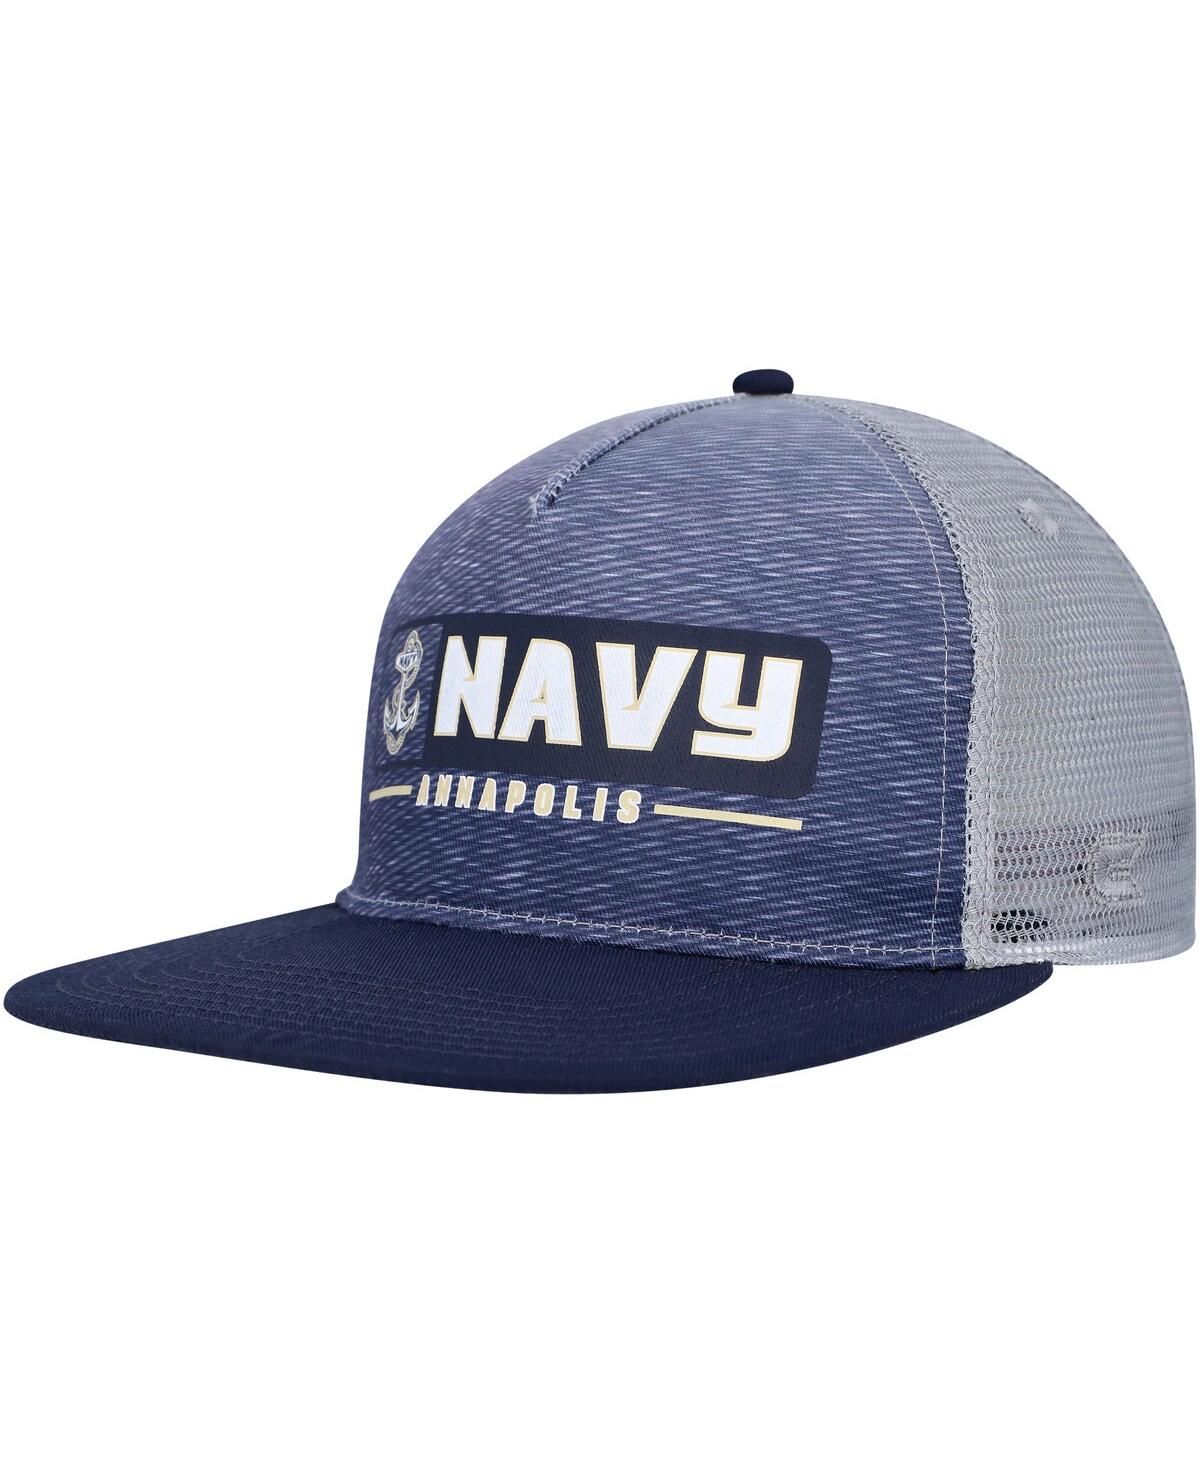 Men's Colosseum Navy, Gray Navy Midshipmen Snapback Hat - Navy, Gray